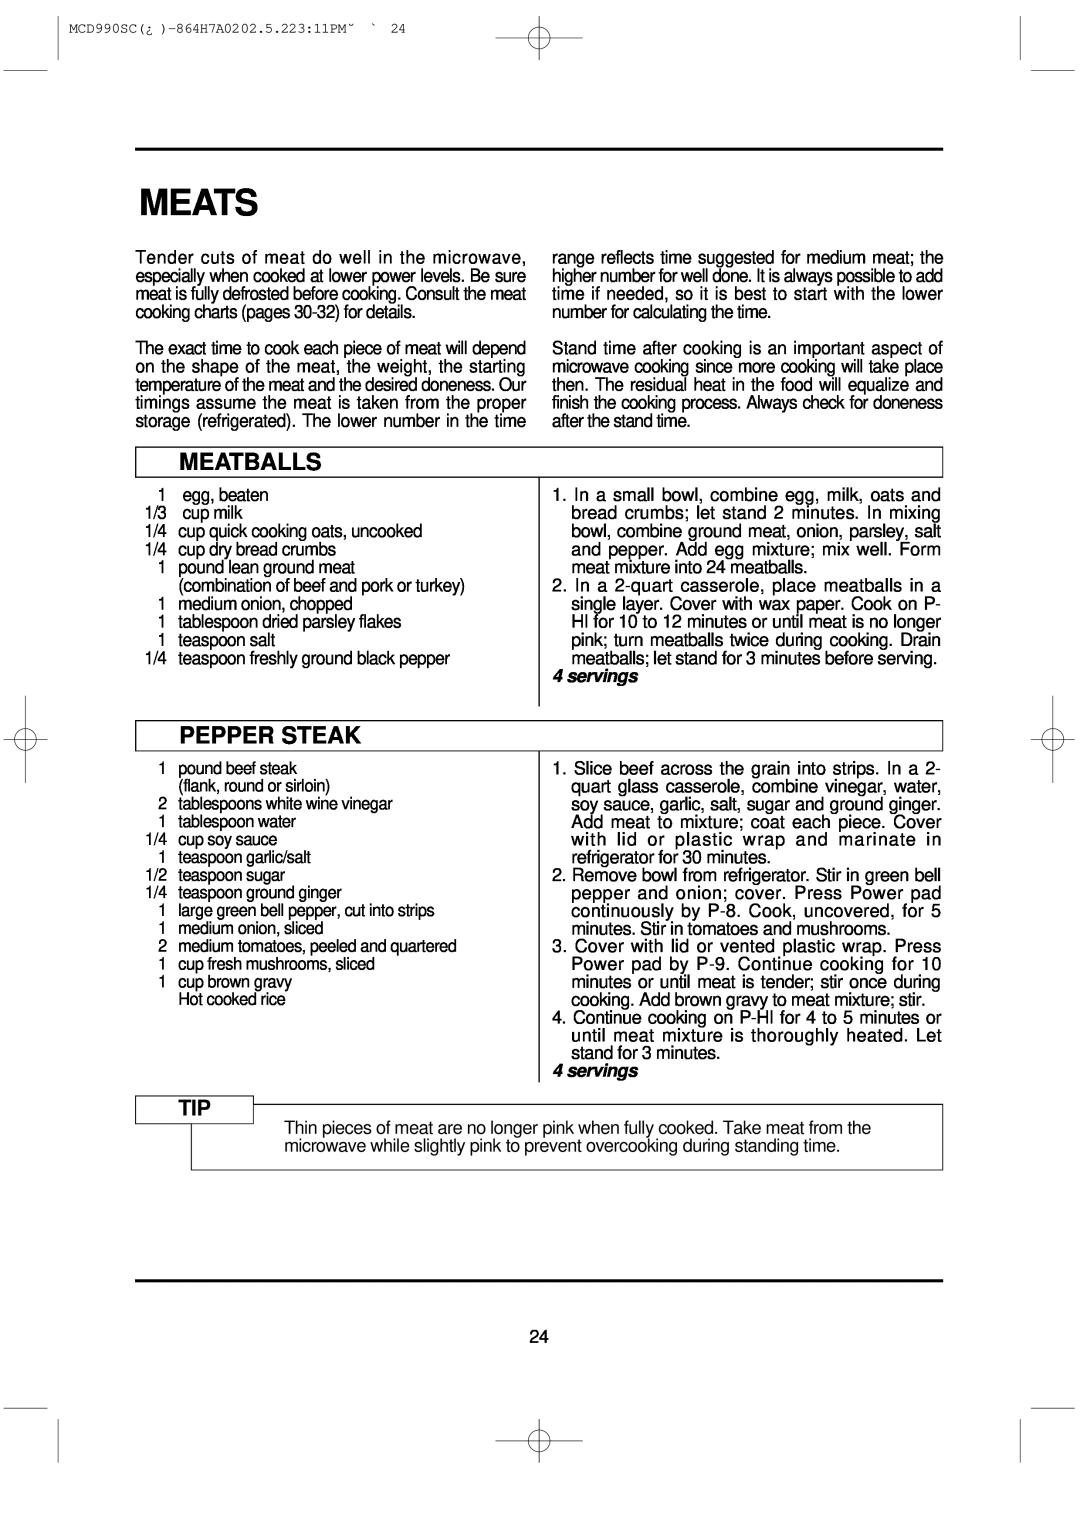 Magic Chef MCD990SC instruction manual Meats, Meatballs, Pepper Steak, servings 